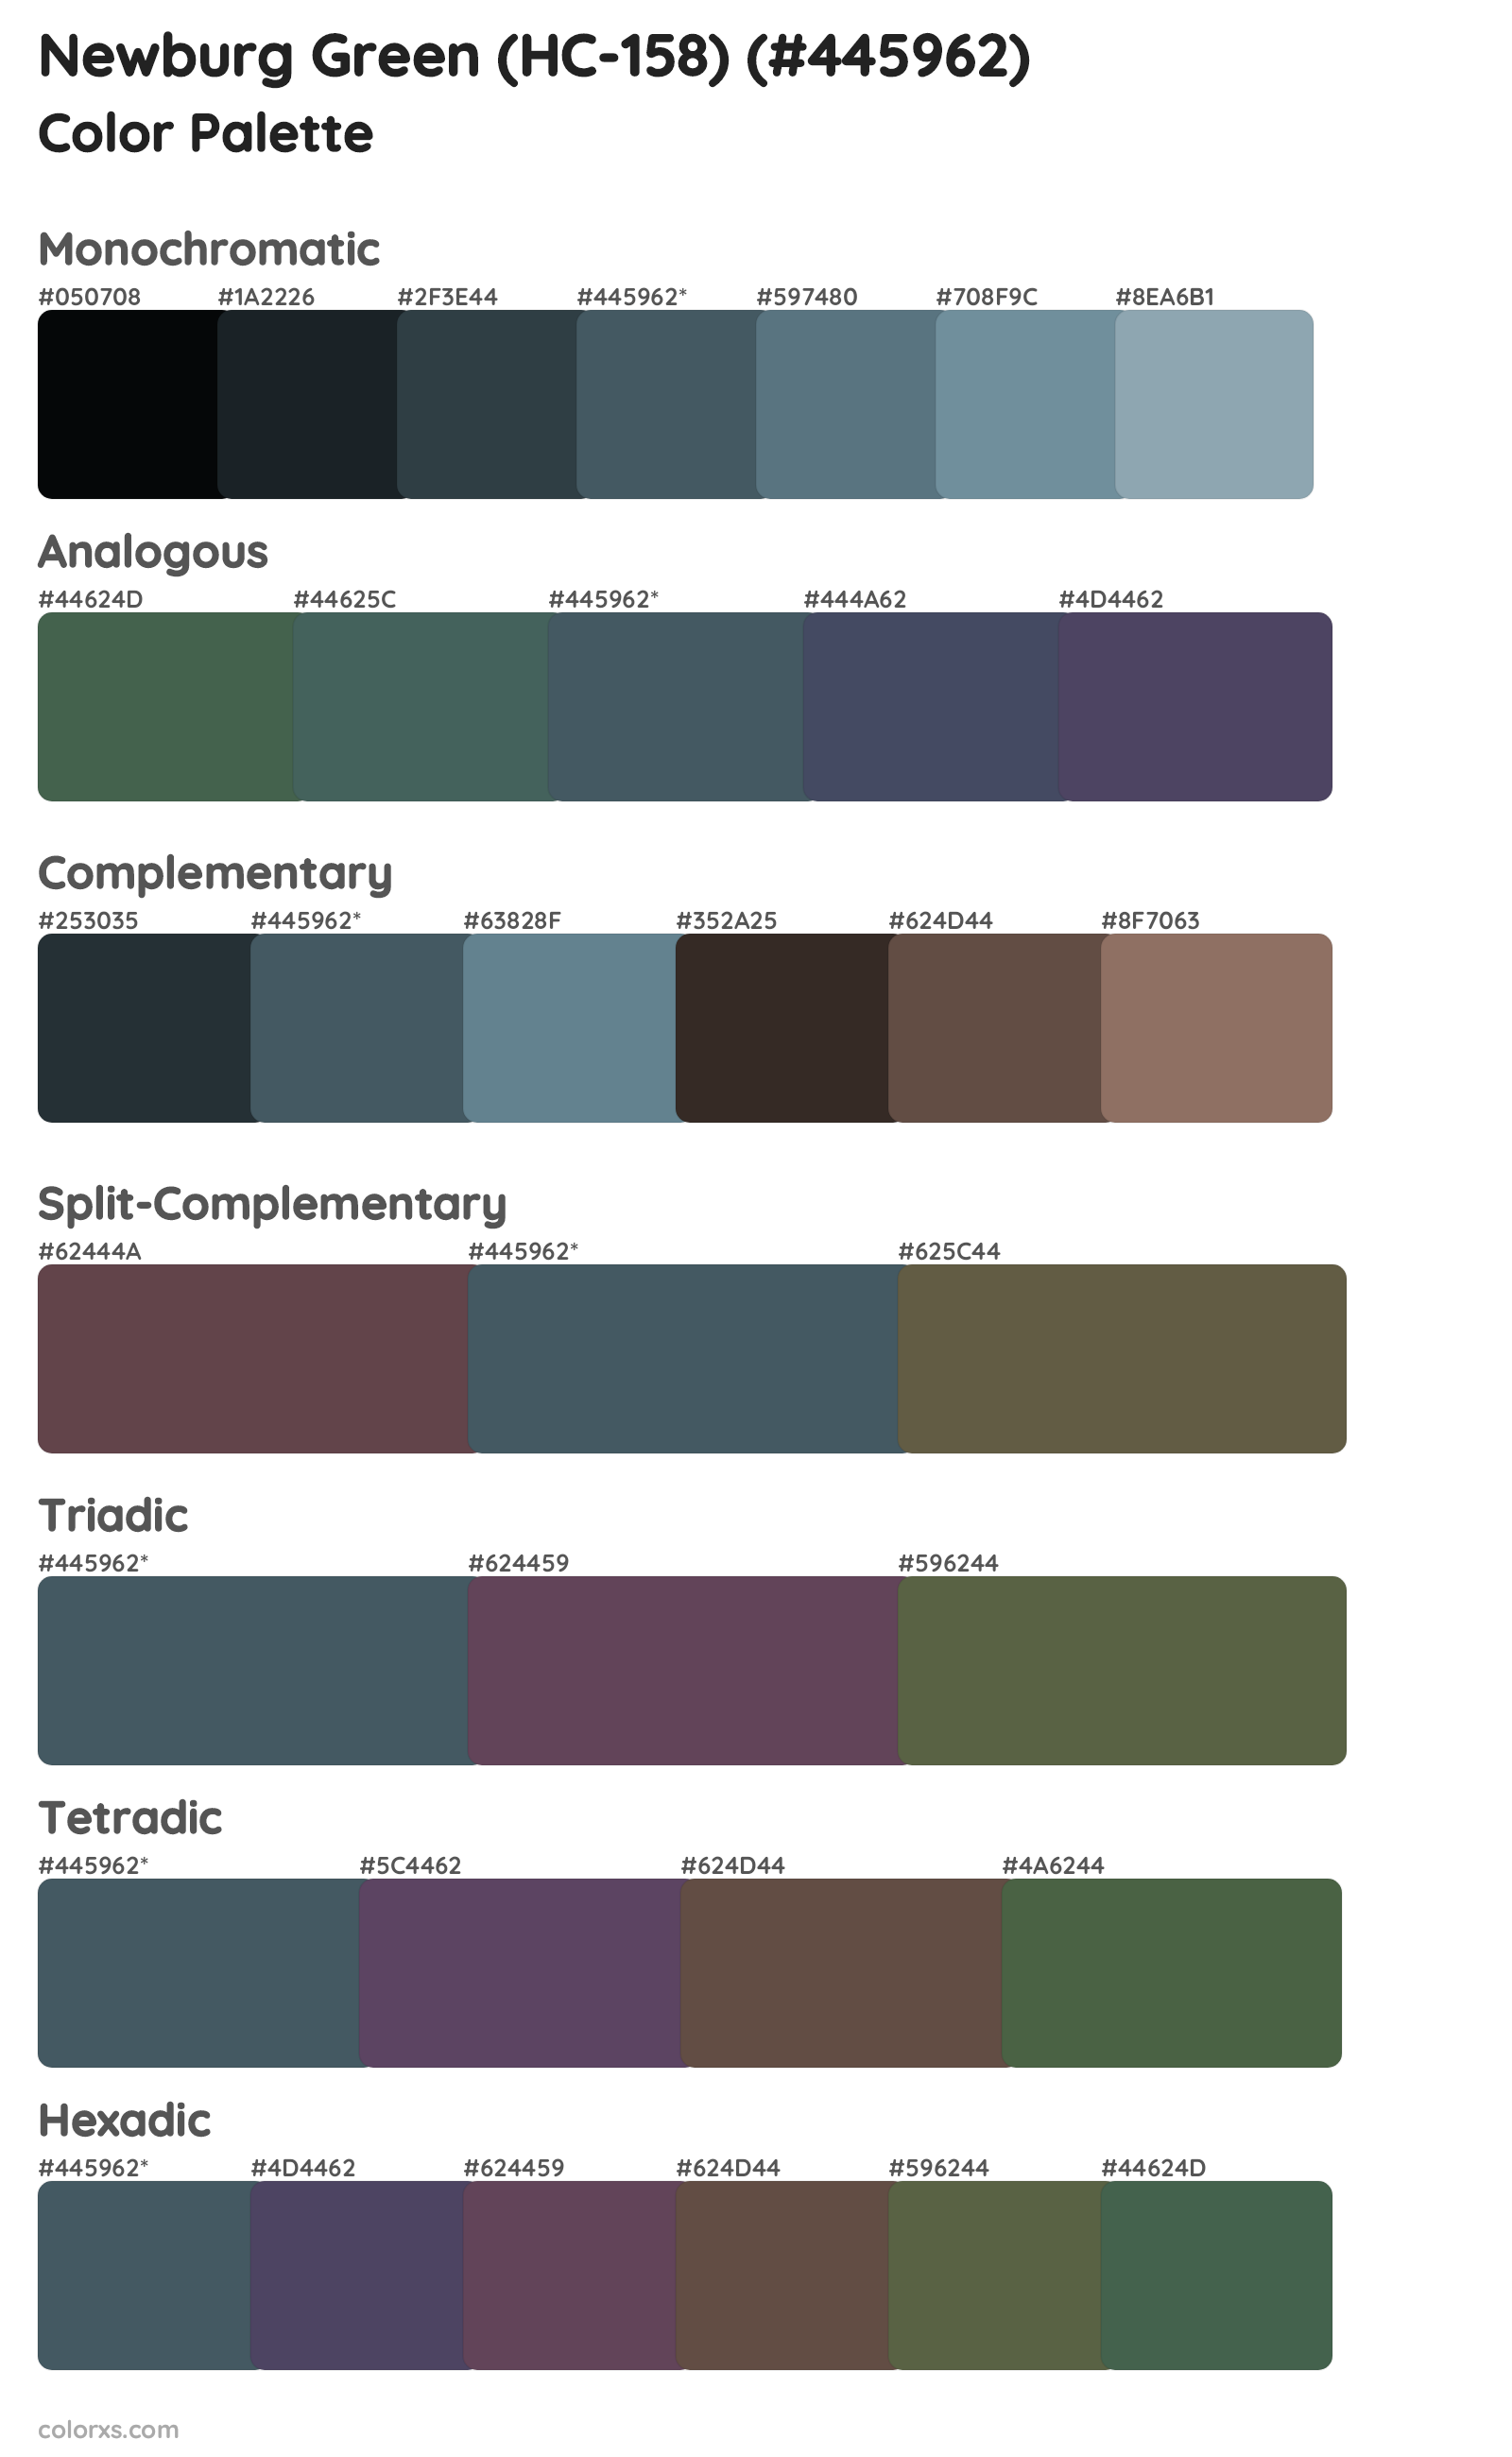 Newburg Green (HC-158) Color Scheme Palettes